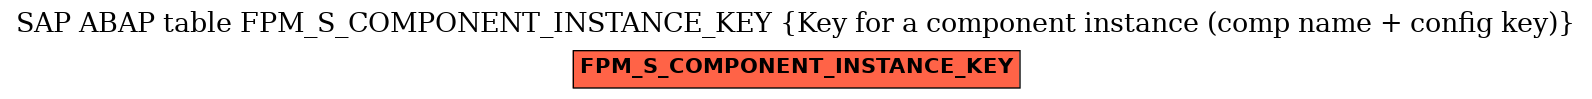 E-R Diagram for table FPM_S_COMPONENT_INSTANCE_KEY (Key for a component instance (comp name + config key))